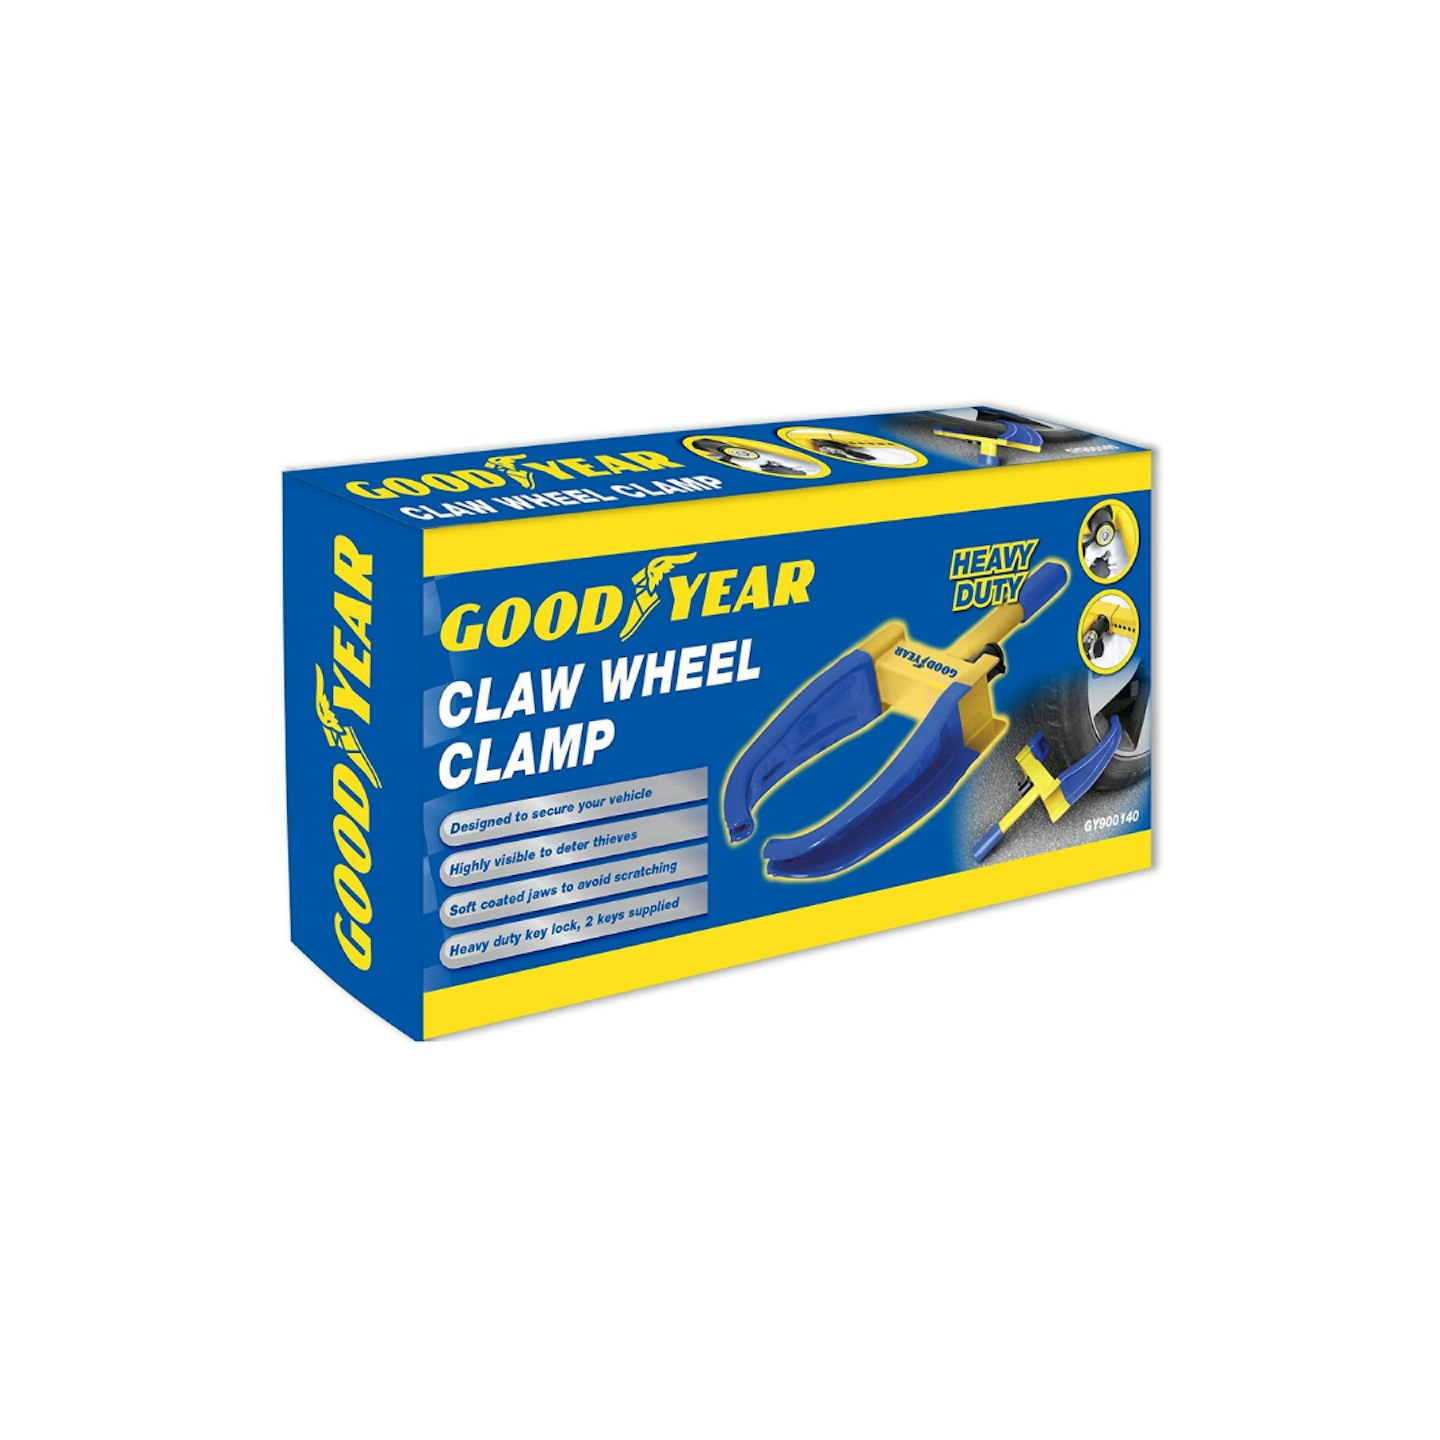 Goodyear claw wheel clamp